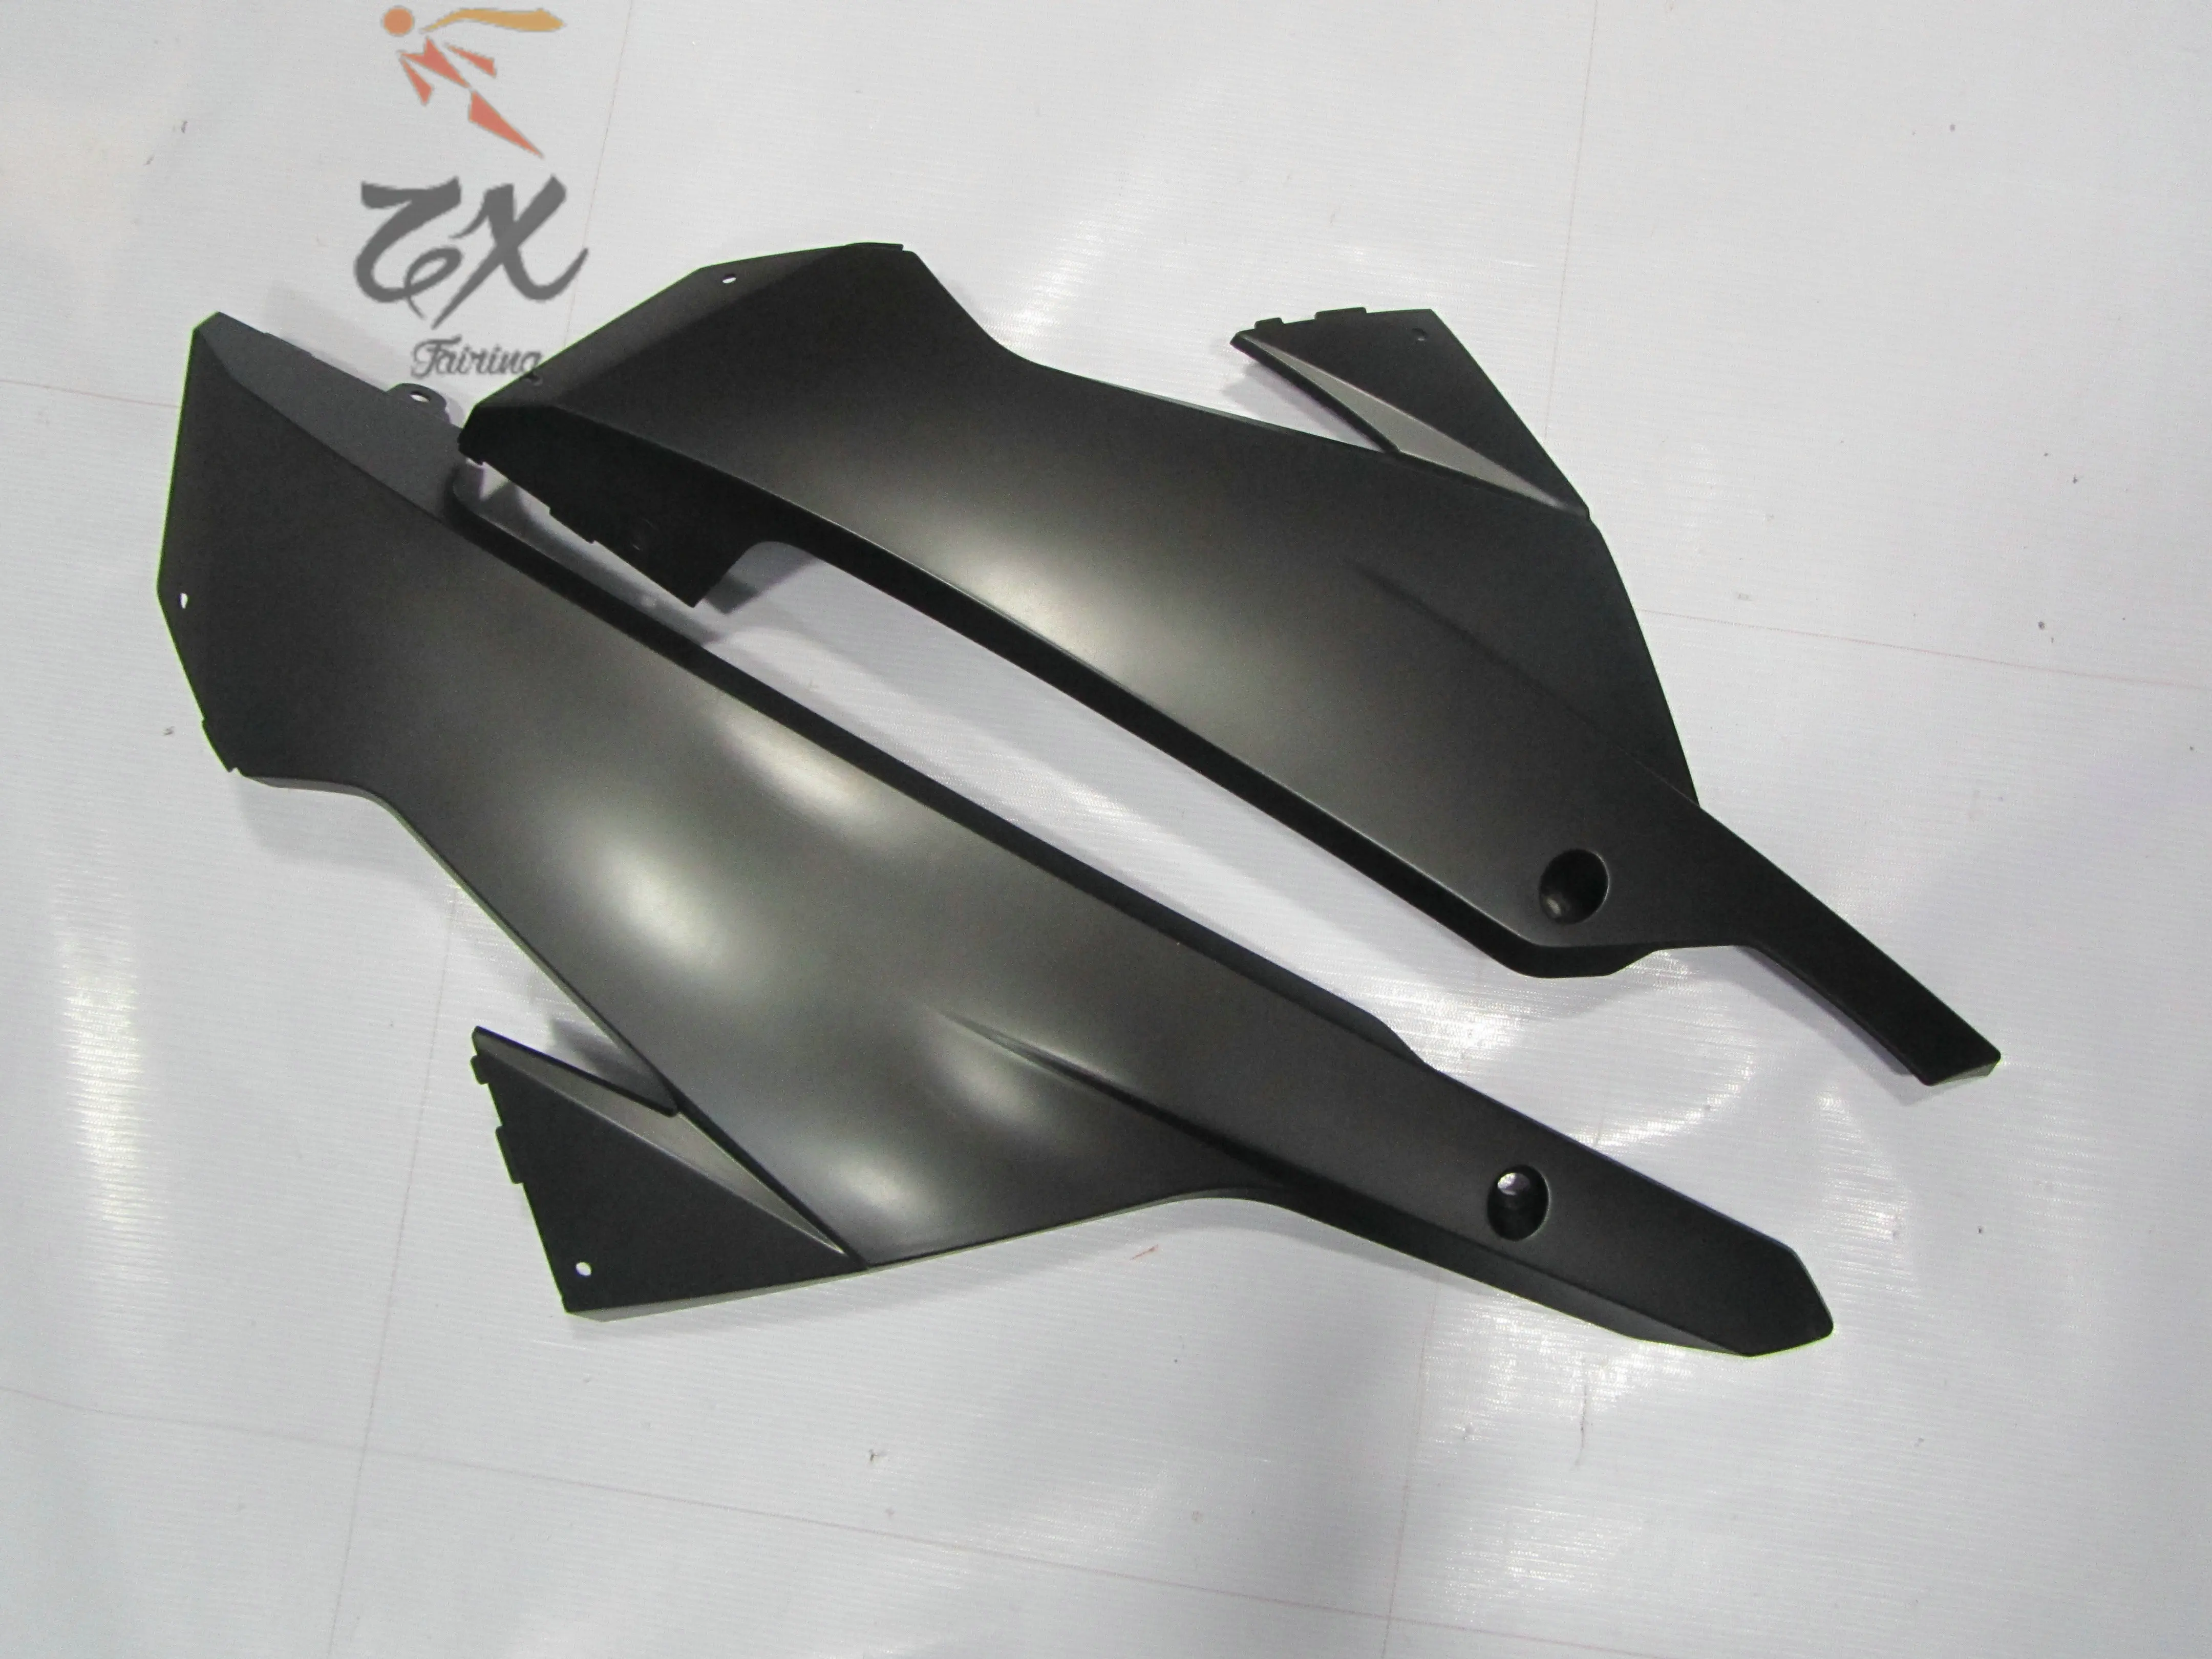 

for Motorcycle ABS Plastic Fairing Kit Bodywork Bolts for kawasaki ninja 300 2013 2014 Z300 2013 2014 faring loqwer side